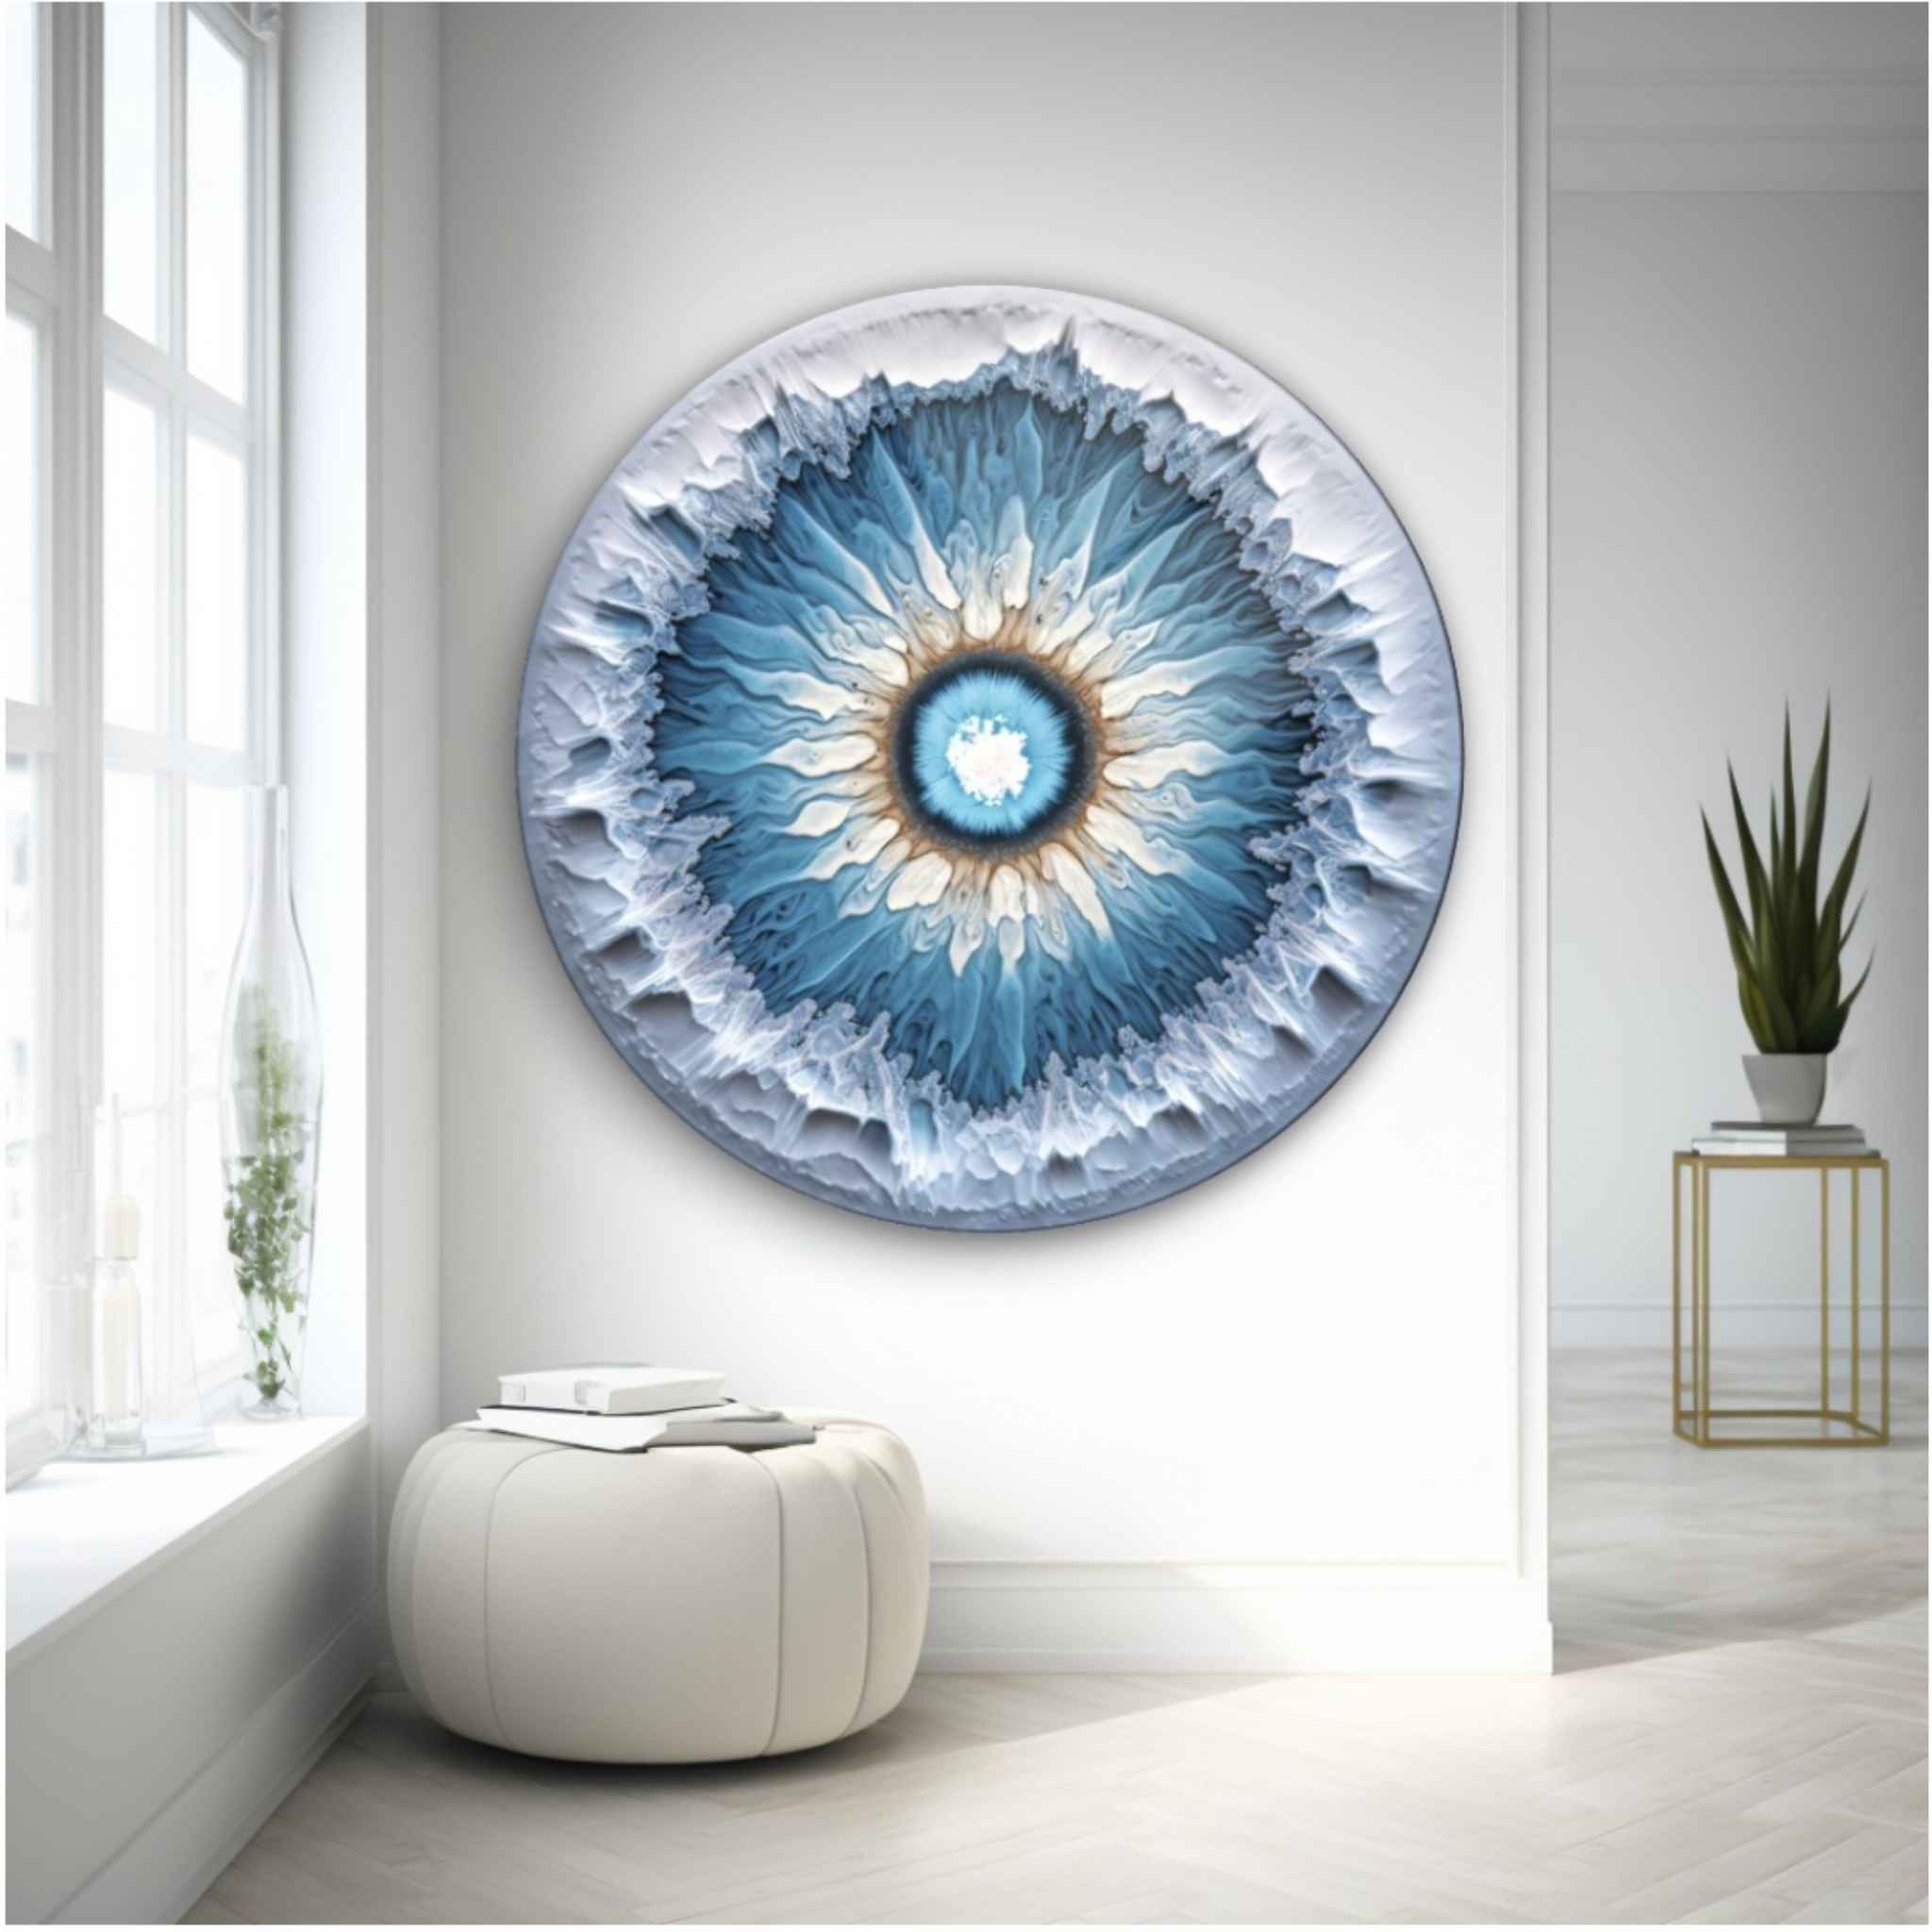 Blue Eyes Glass Wall Art